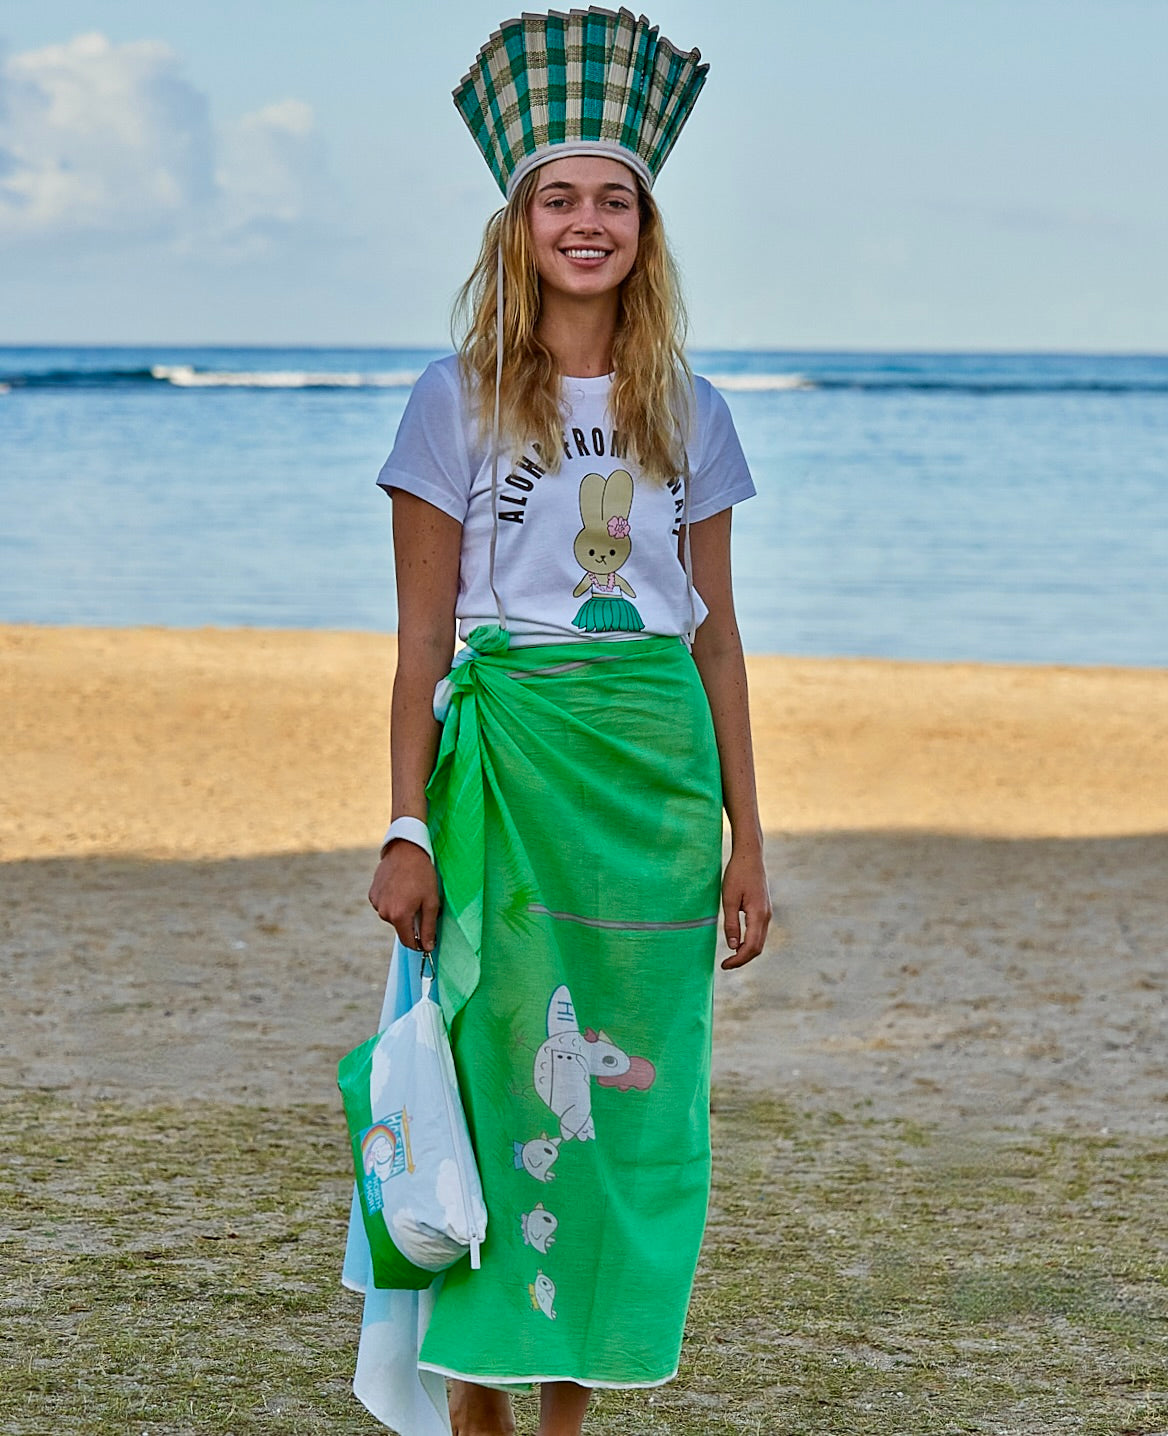 Atasha Rabbit Surfs Haleiwa Pouch: Inspired by Haleiwa